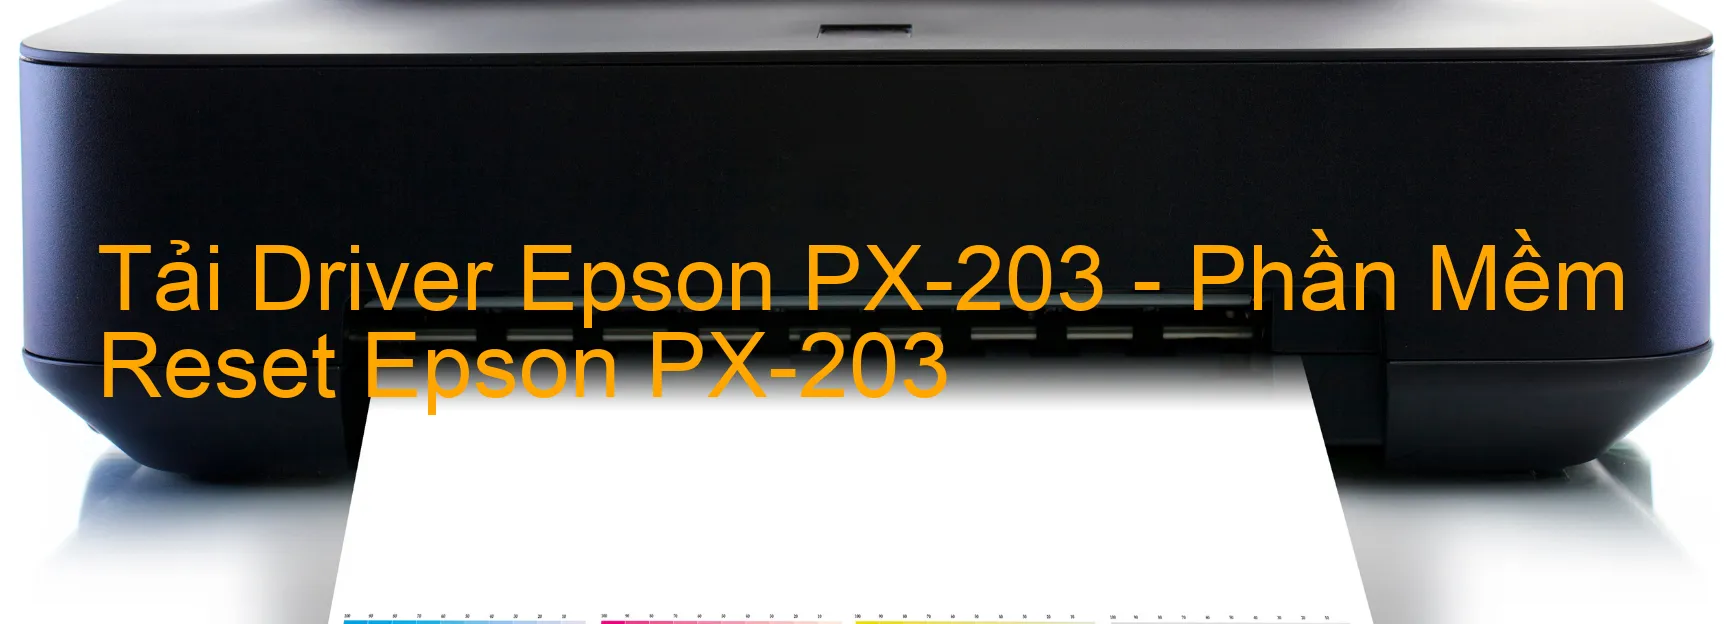 Driver Epson PX-203, Phần Mềm Reset Epson PX-203